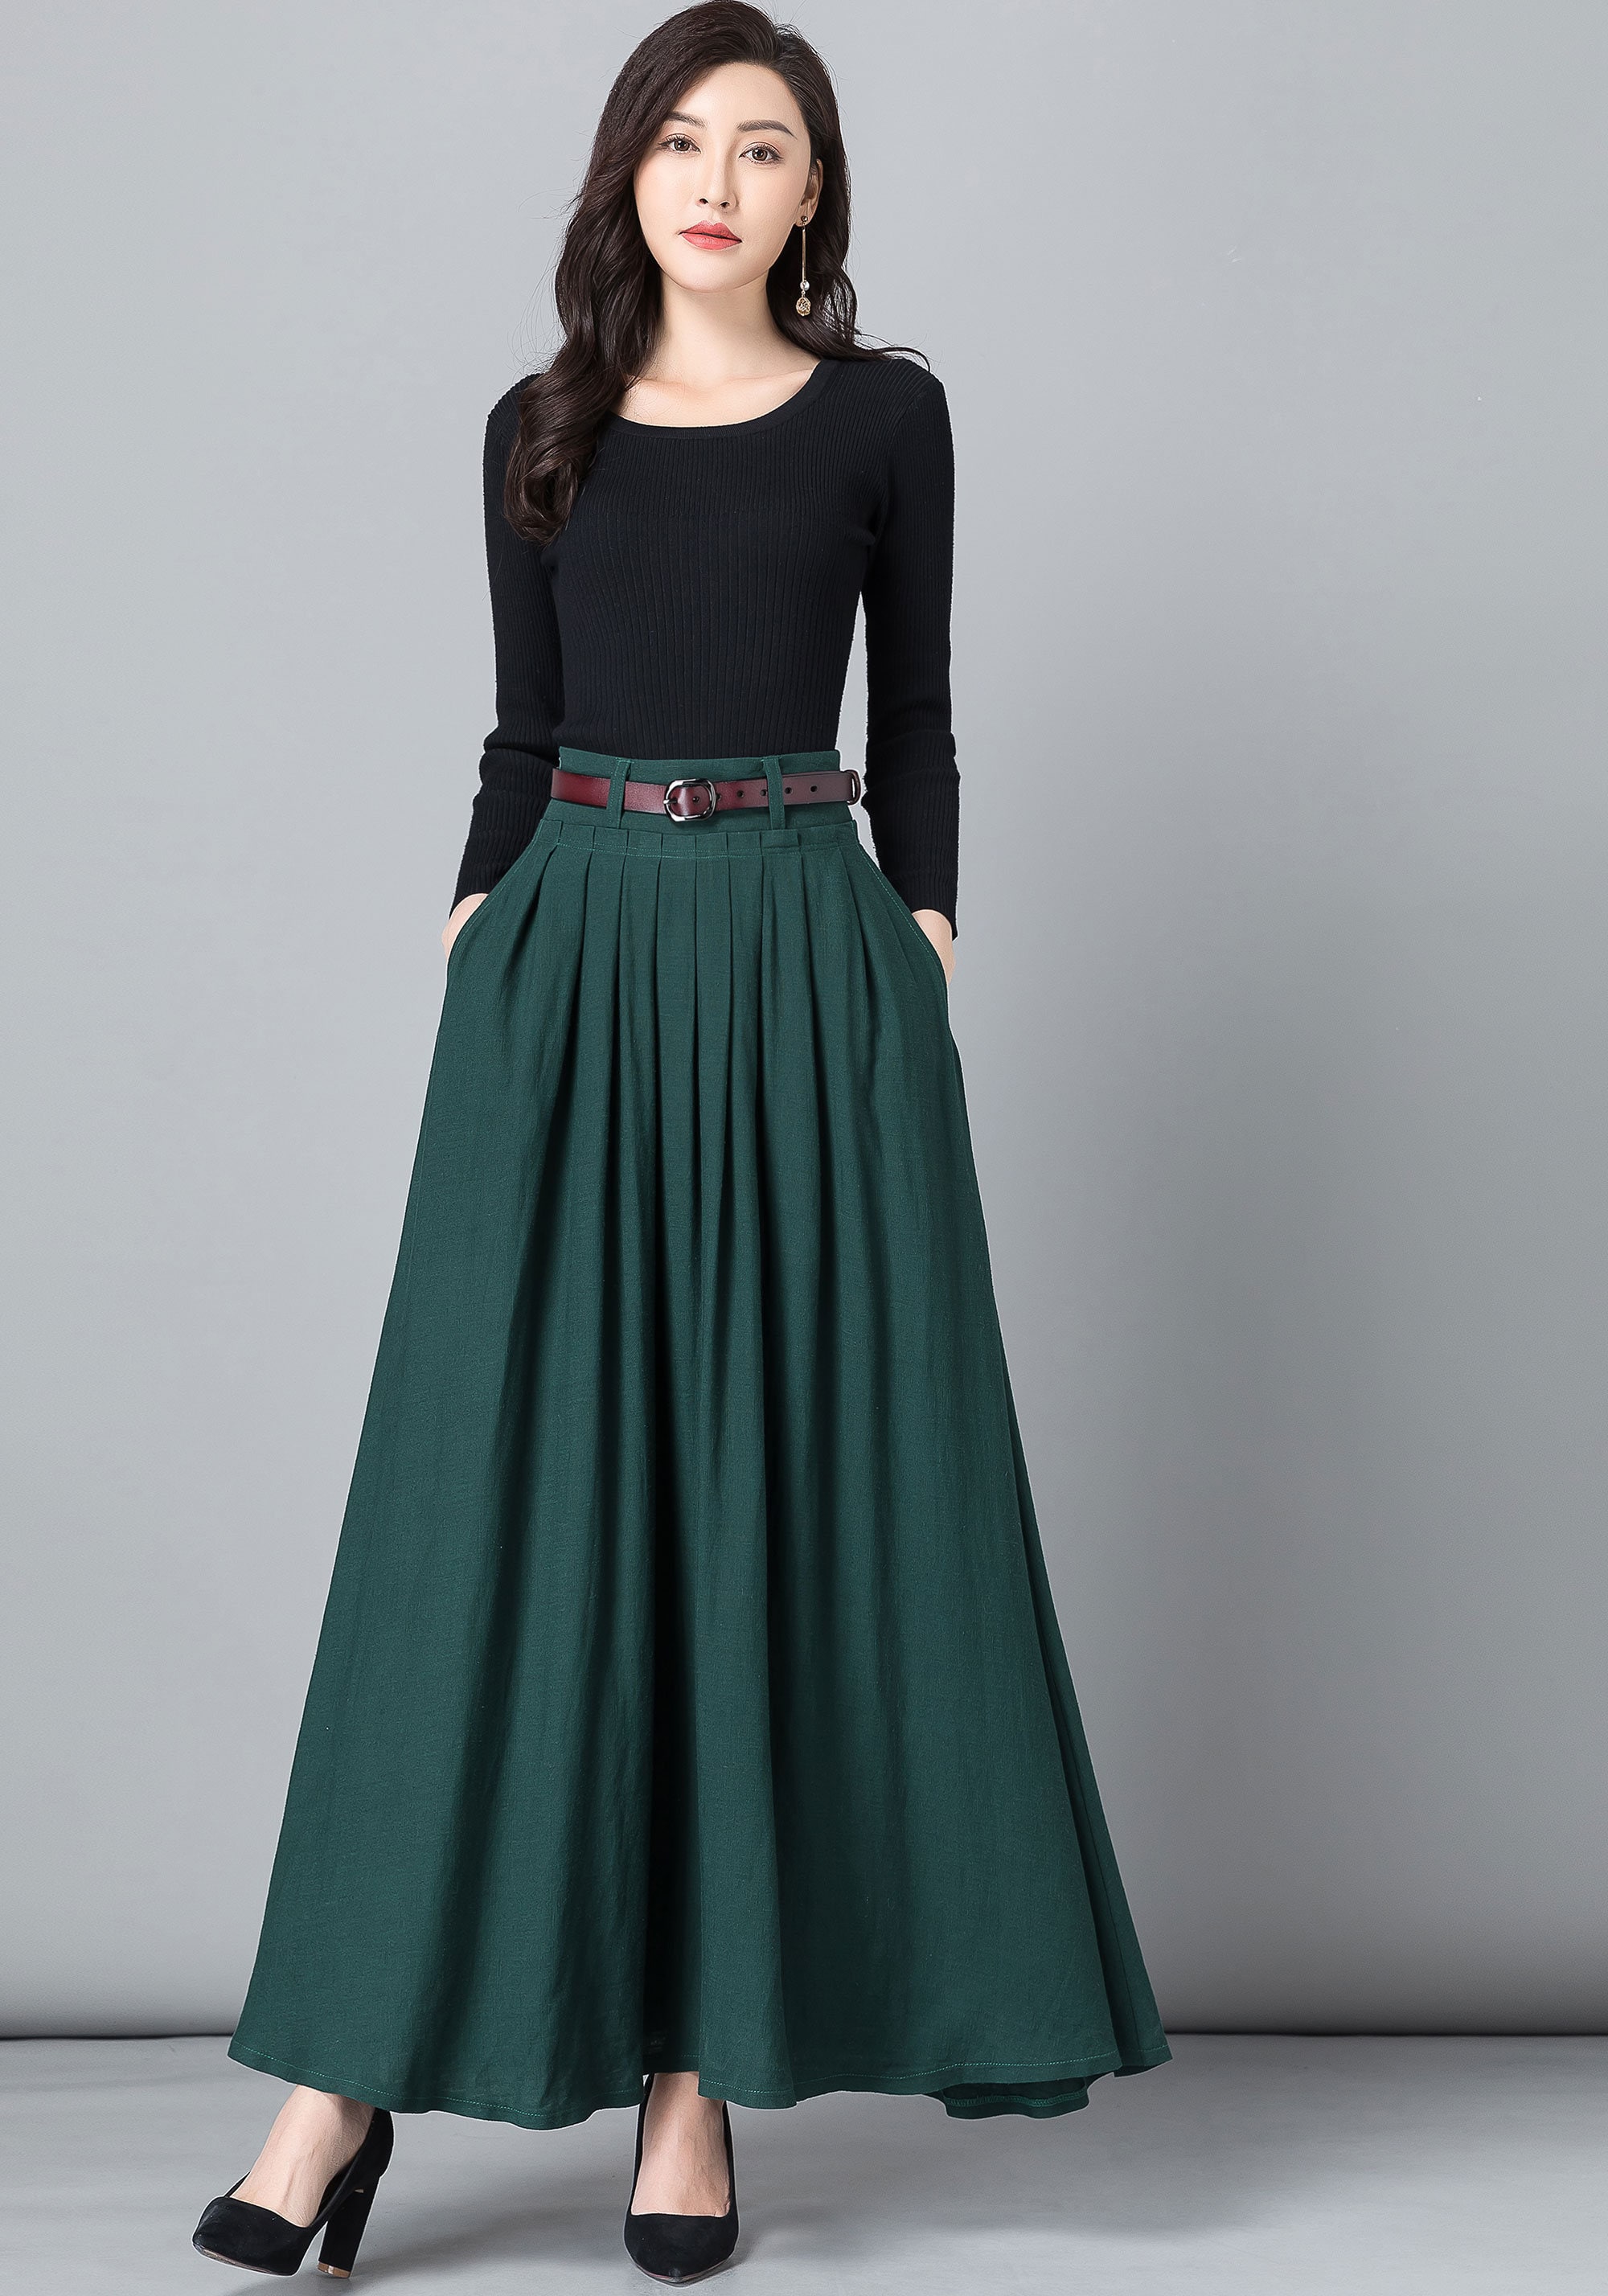 Long Maxi Skirt Work Outfit, Long Linen Skirt, High Waist Long A line  Pleated Swing Skirt With Pocket, Green Skirt, Full Skirt 2536 -  Norway